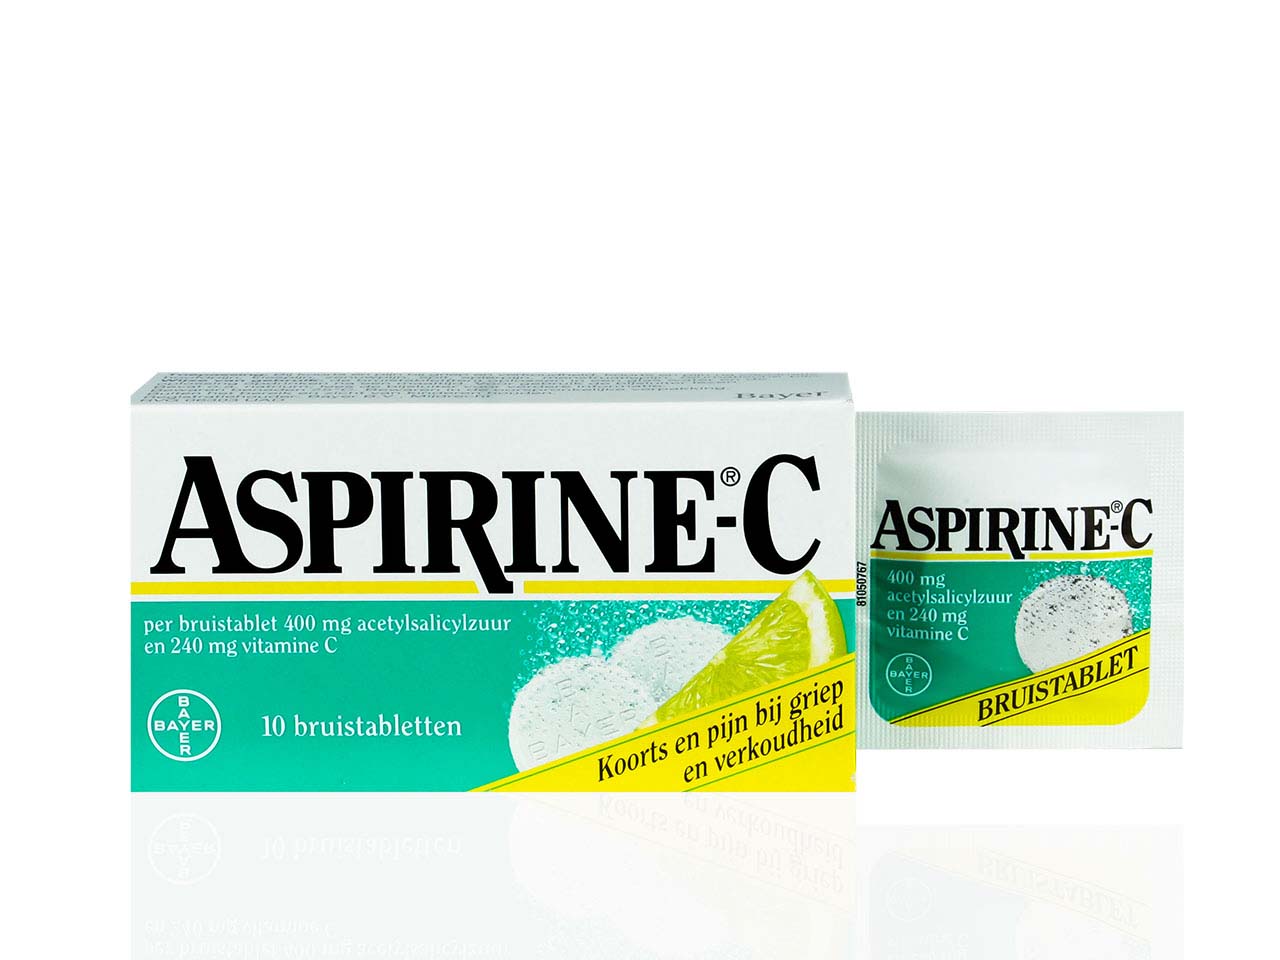 Aspirine C Bruistablet